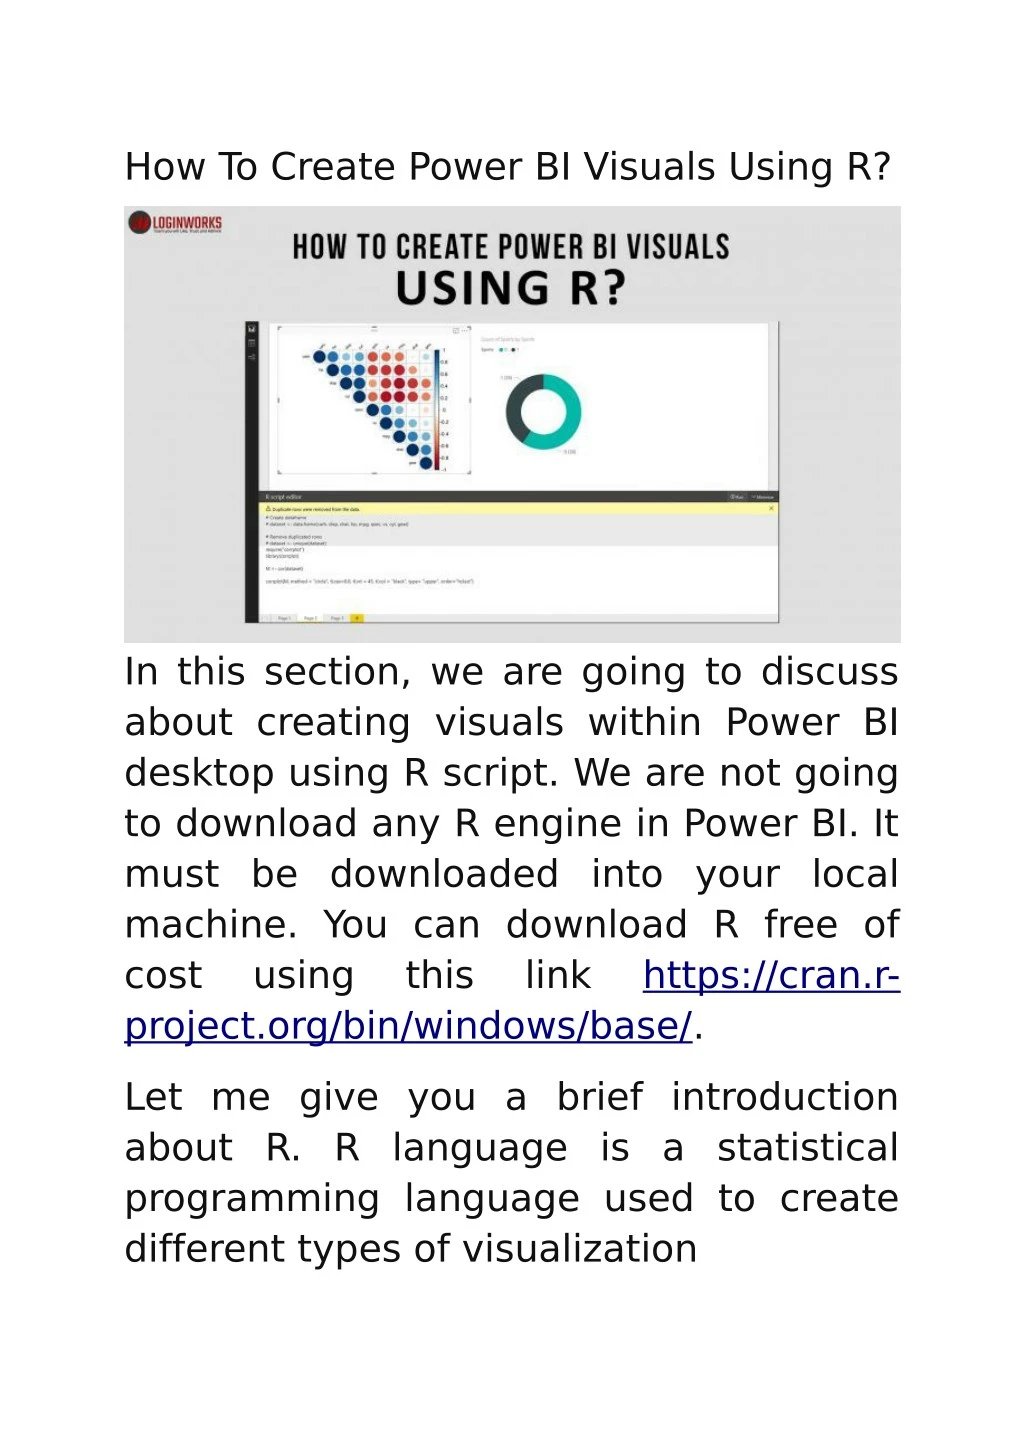 how to create power bi visuals using r